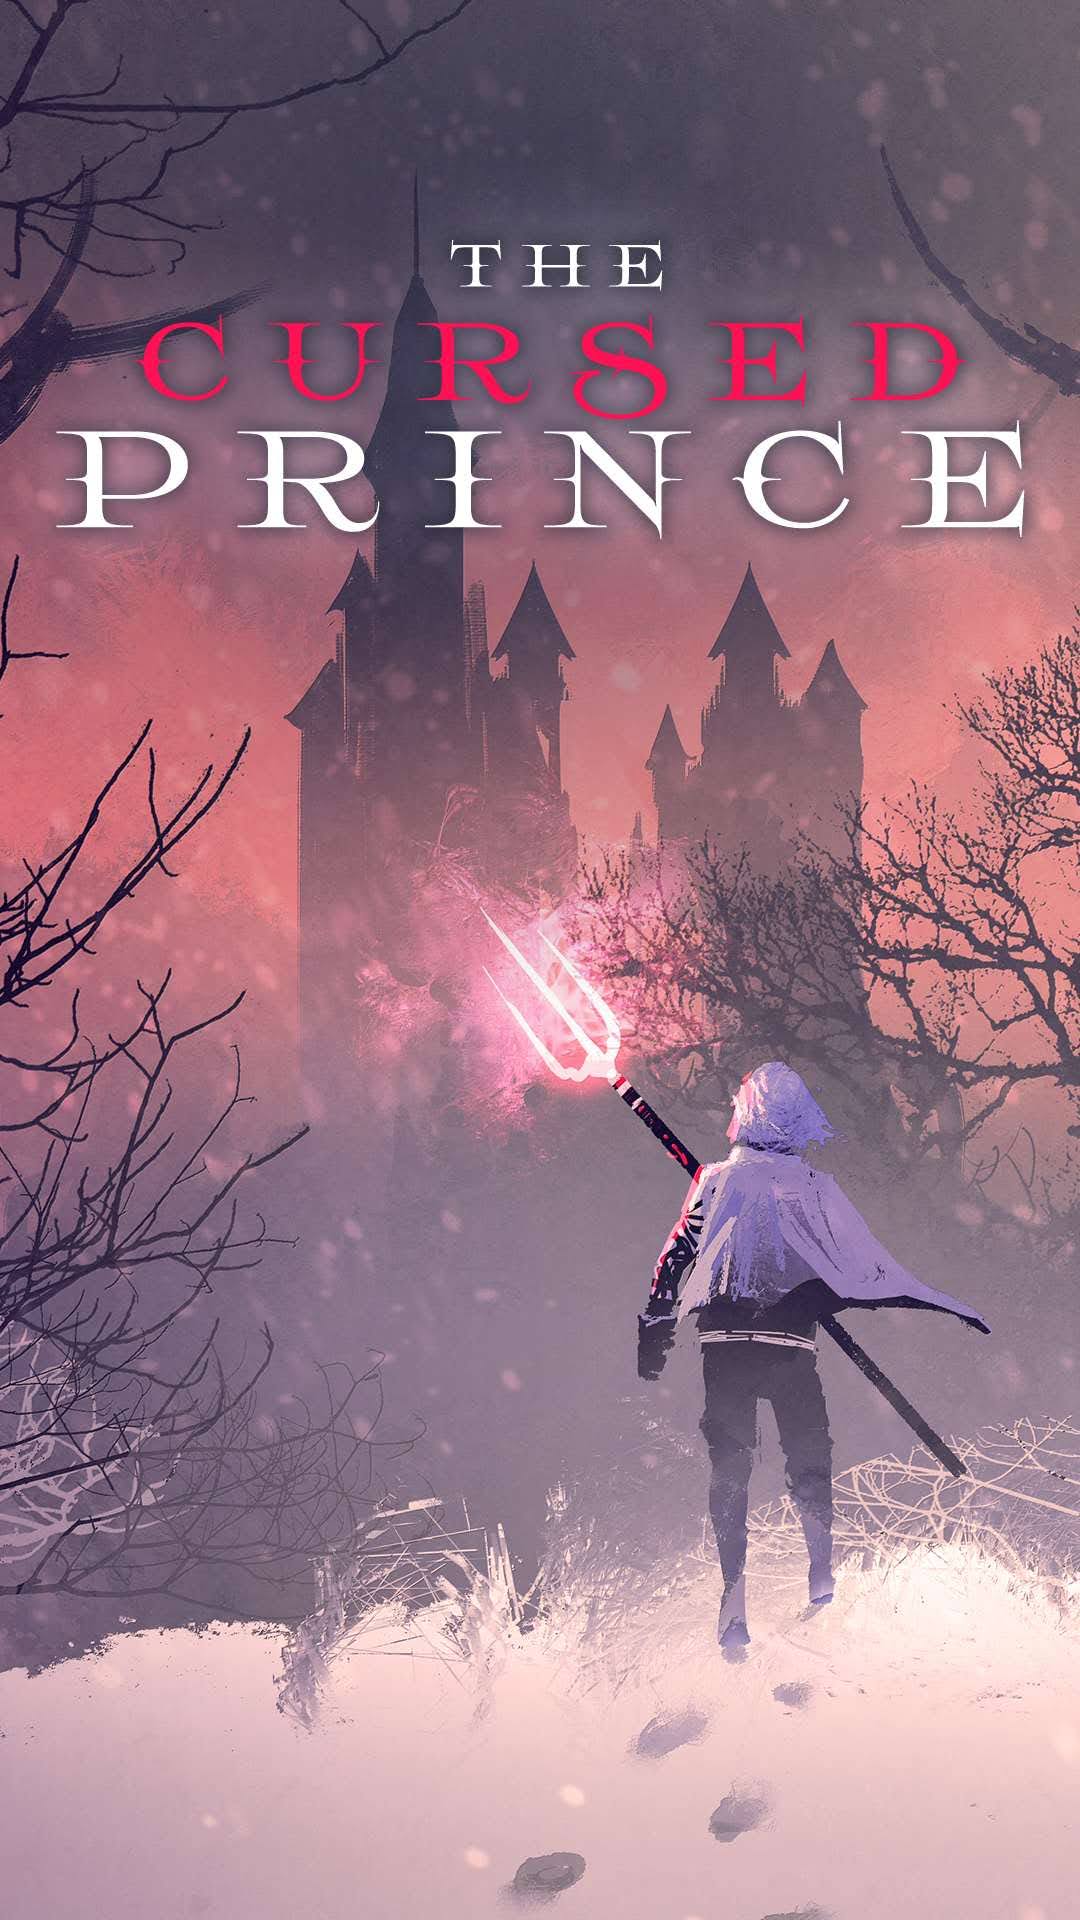 Prince, Murder Mystery 2 Wiki